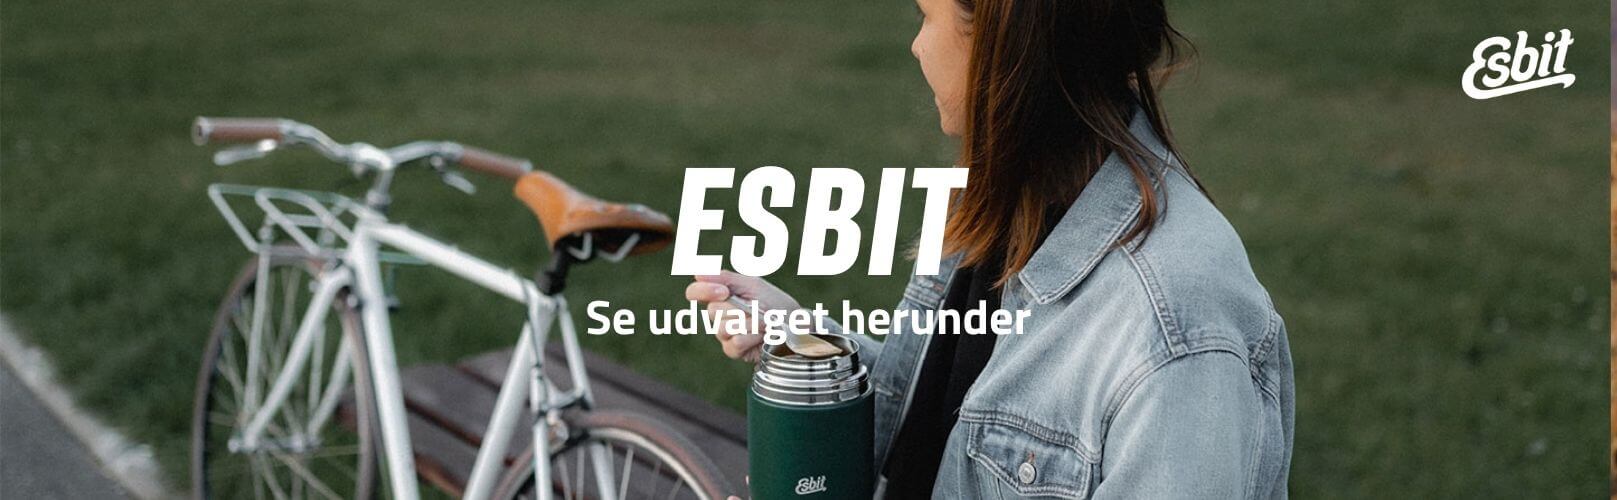 Esbit brand banner